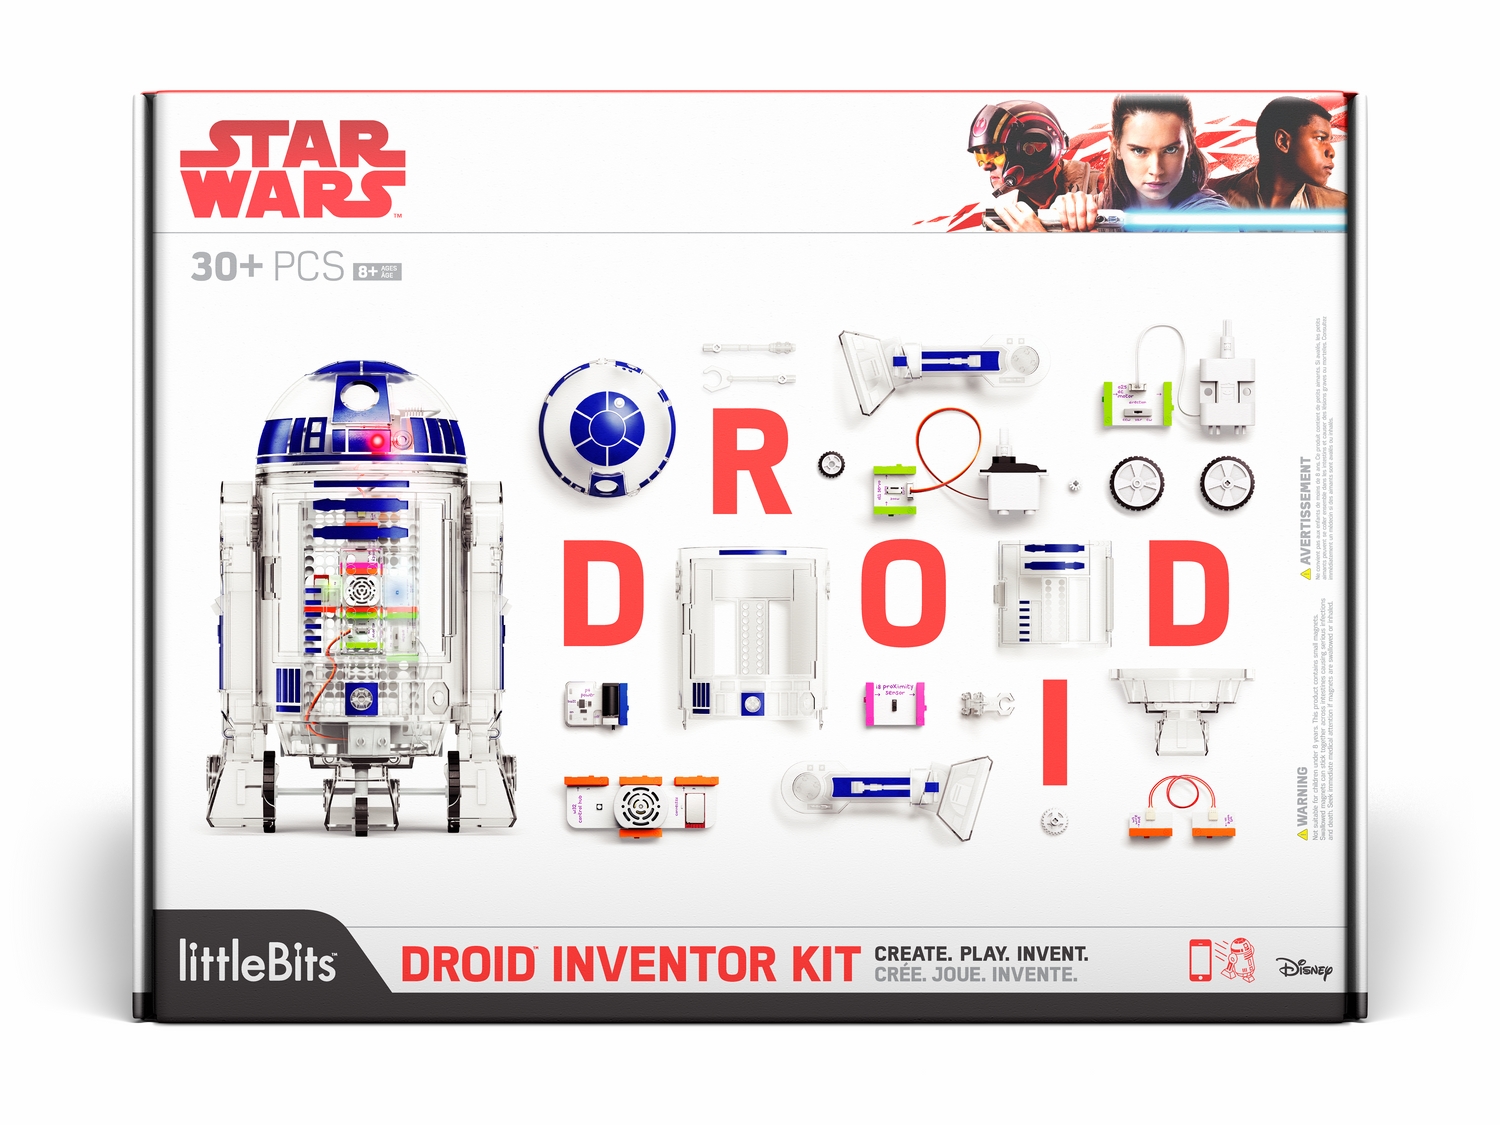 littlebits-droid-inventor-kit-force-friday-005.jpg